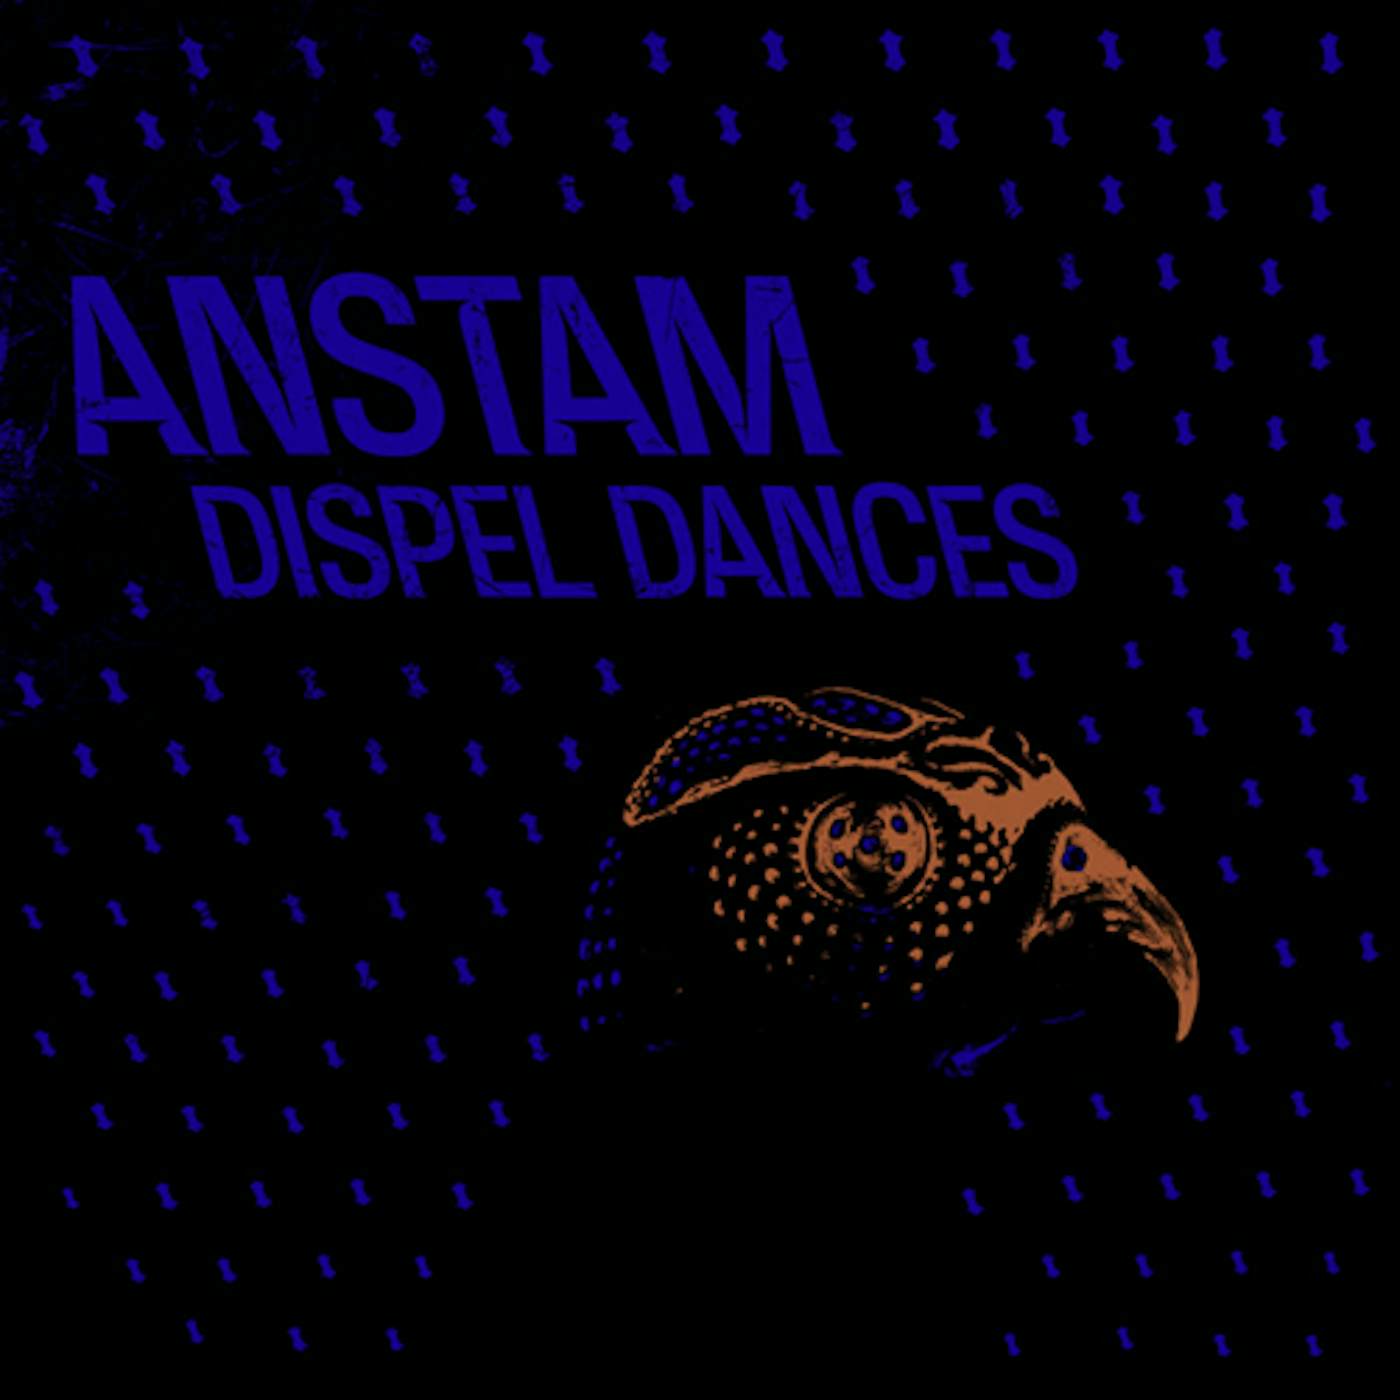 Anstam DISPEL DANCES CD